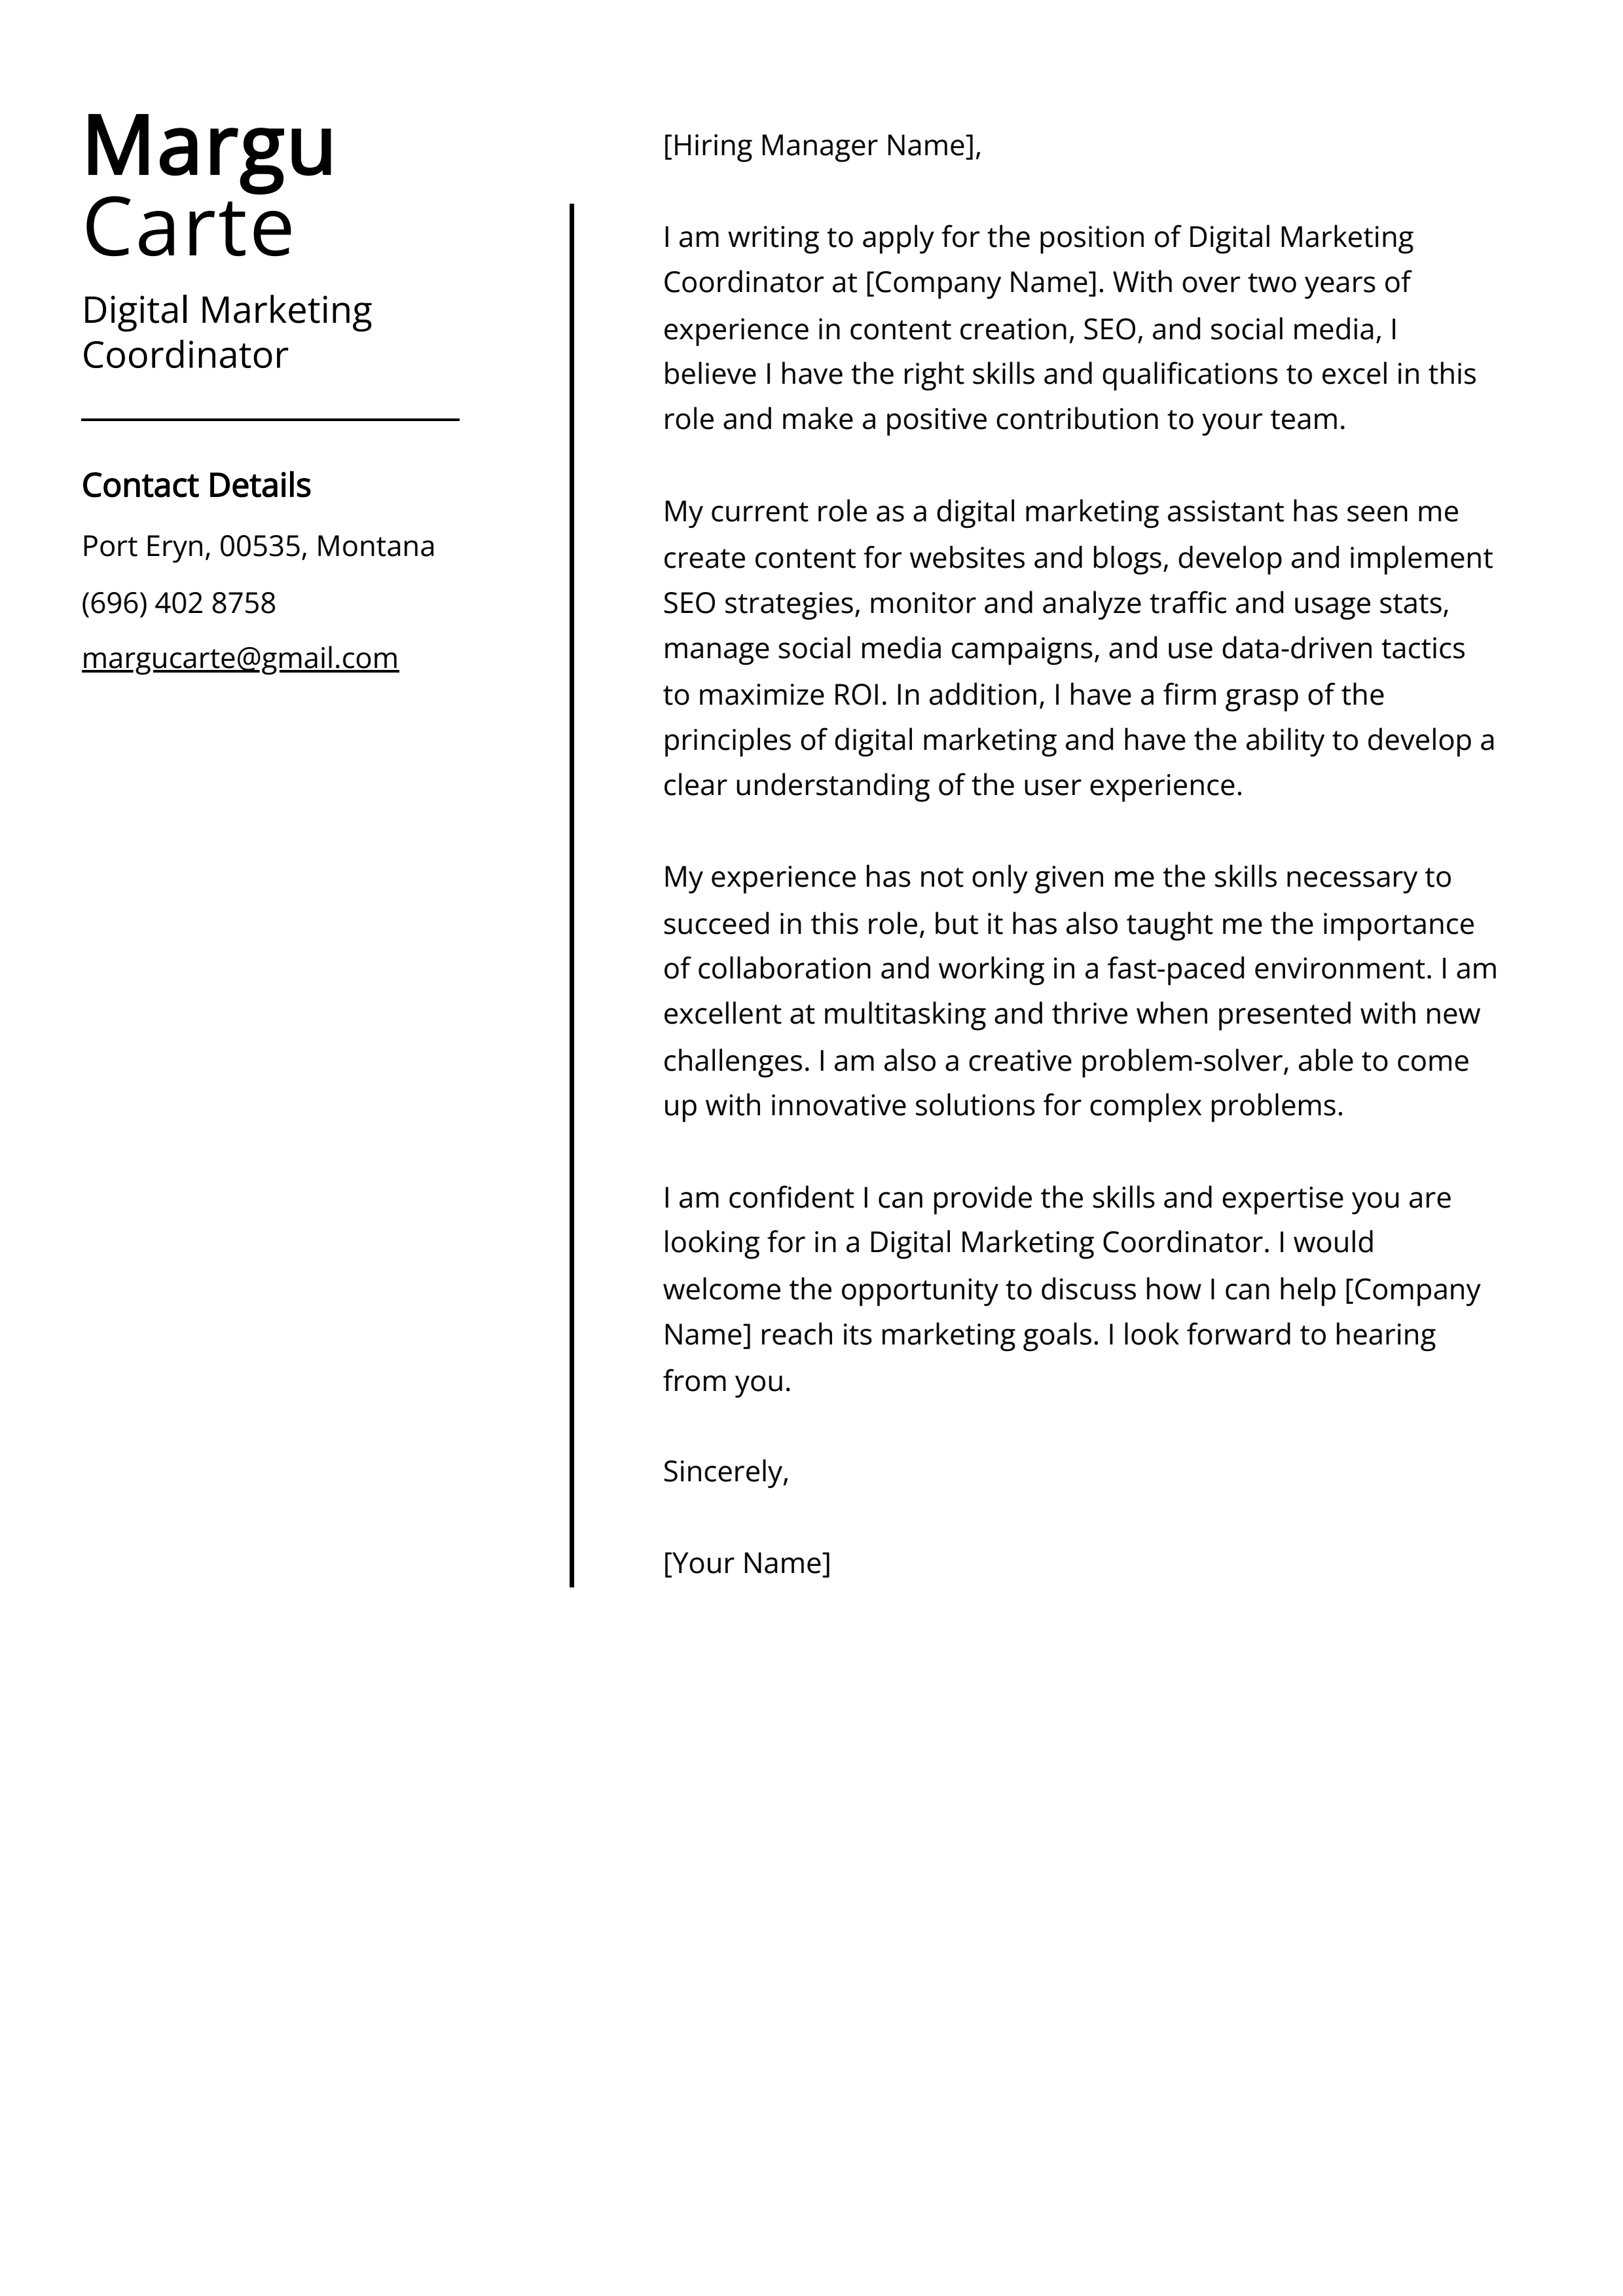 Digital Marketing Coordinator Cover Letter Example